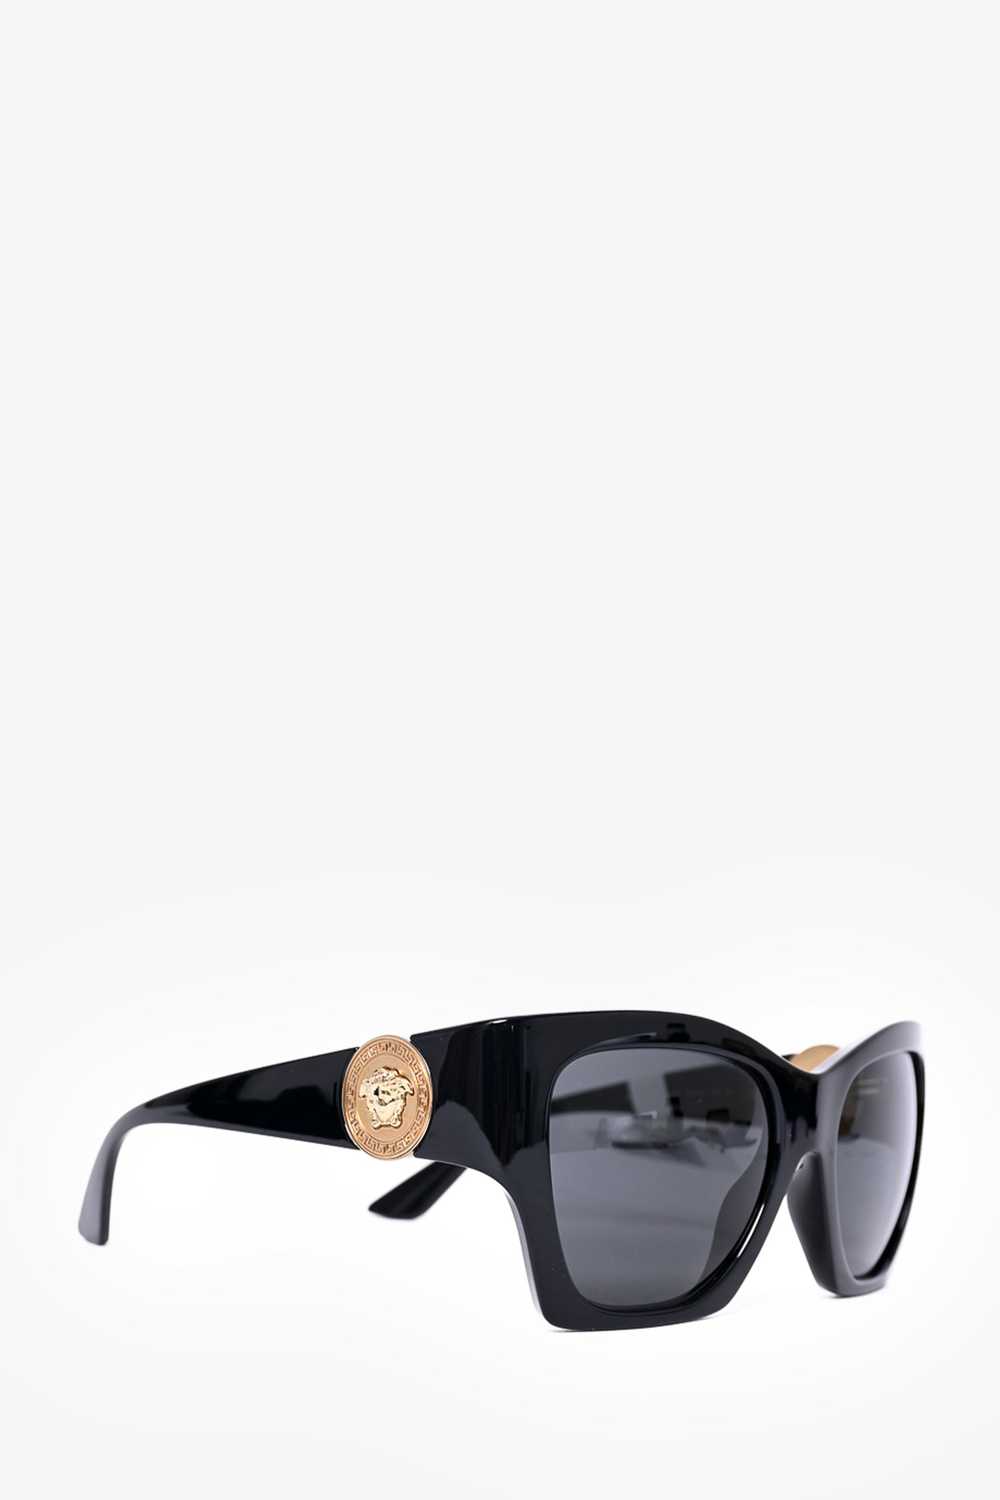 Versace Black Medusa Square Frame Sunglasses - image 2